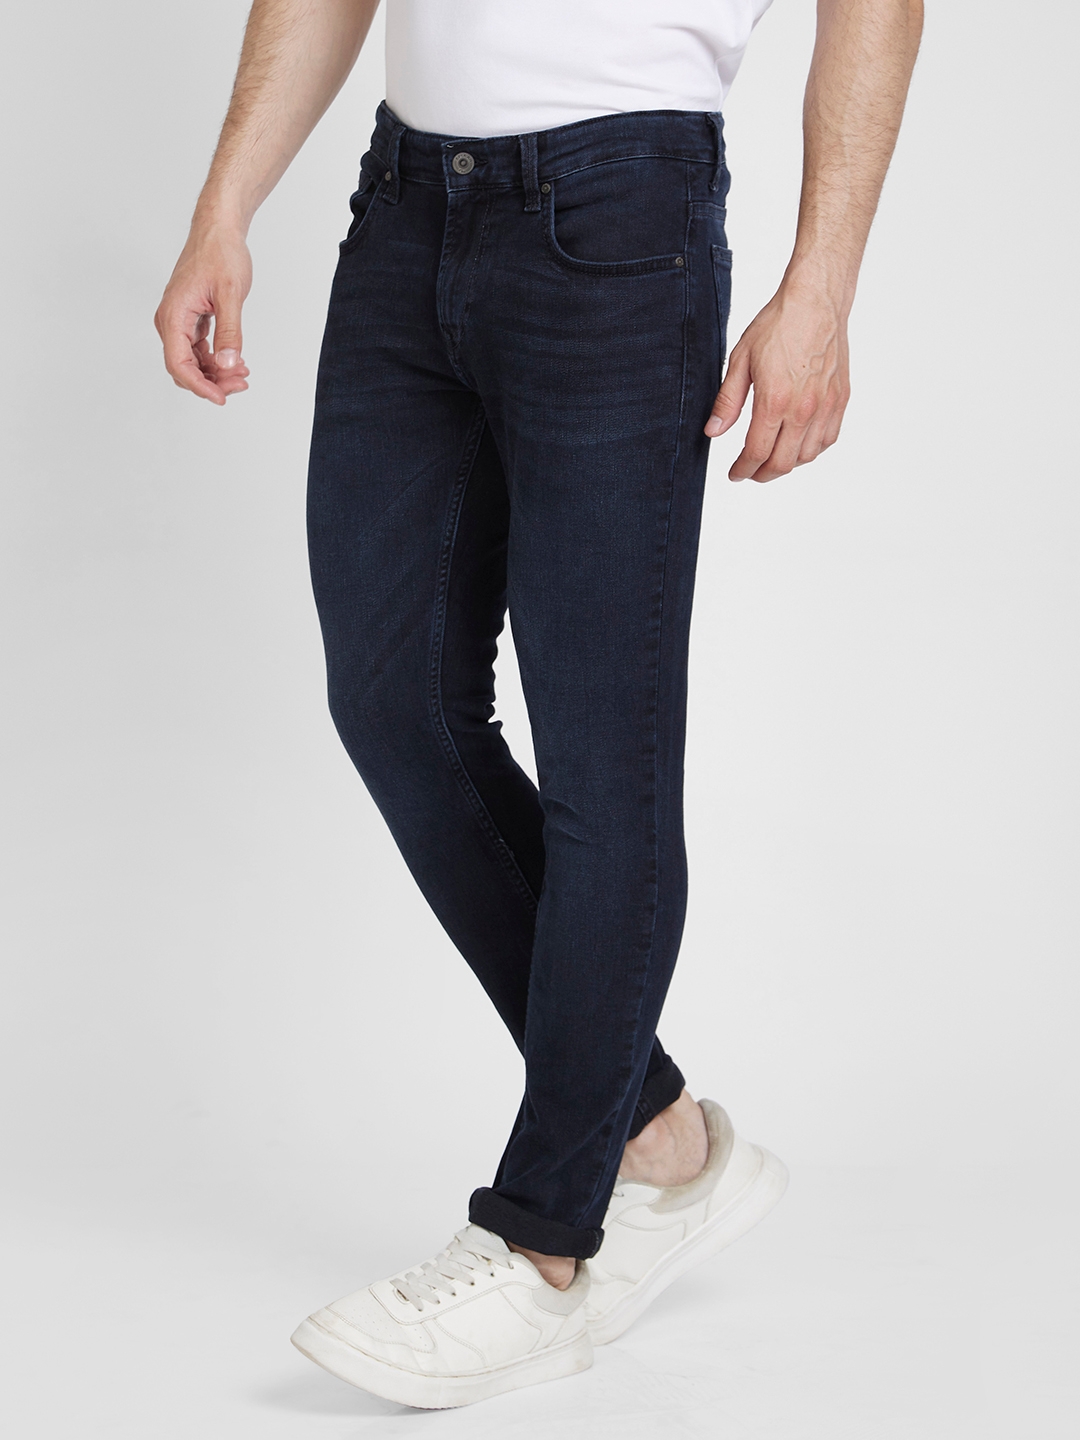 spykar | Spykar Men Charcoal Black Cotton Stretch Super Slim Fit Tapered Length Clean Look Low Rise Jeans - (Super Skinny) 3